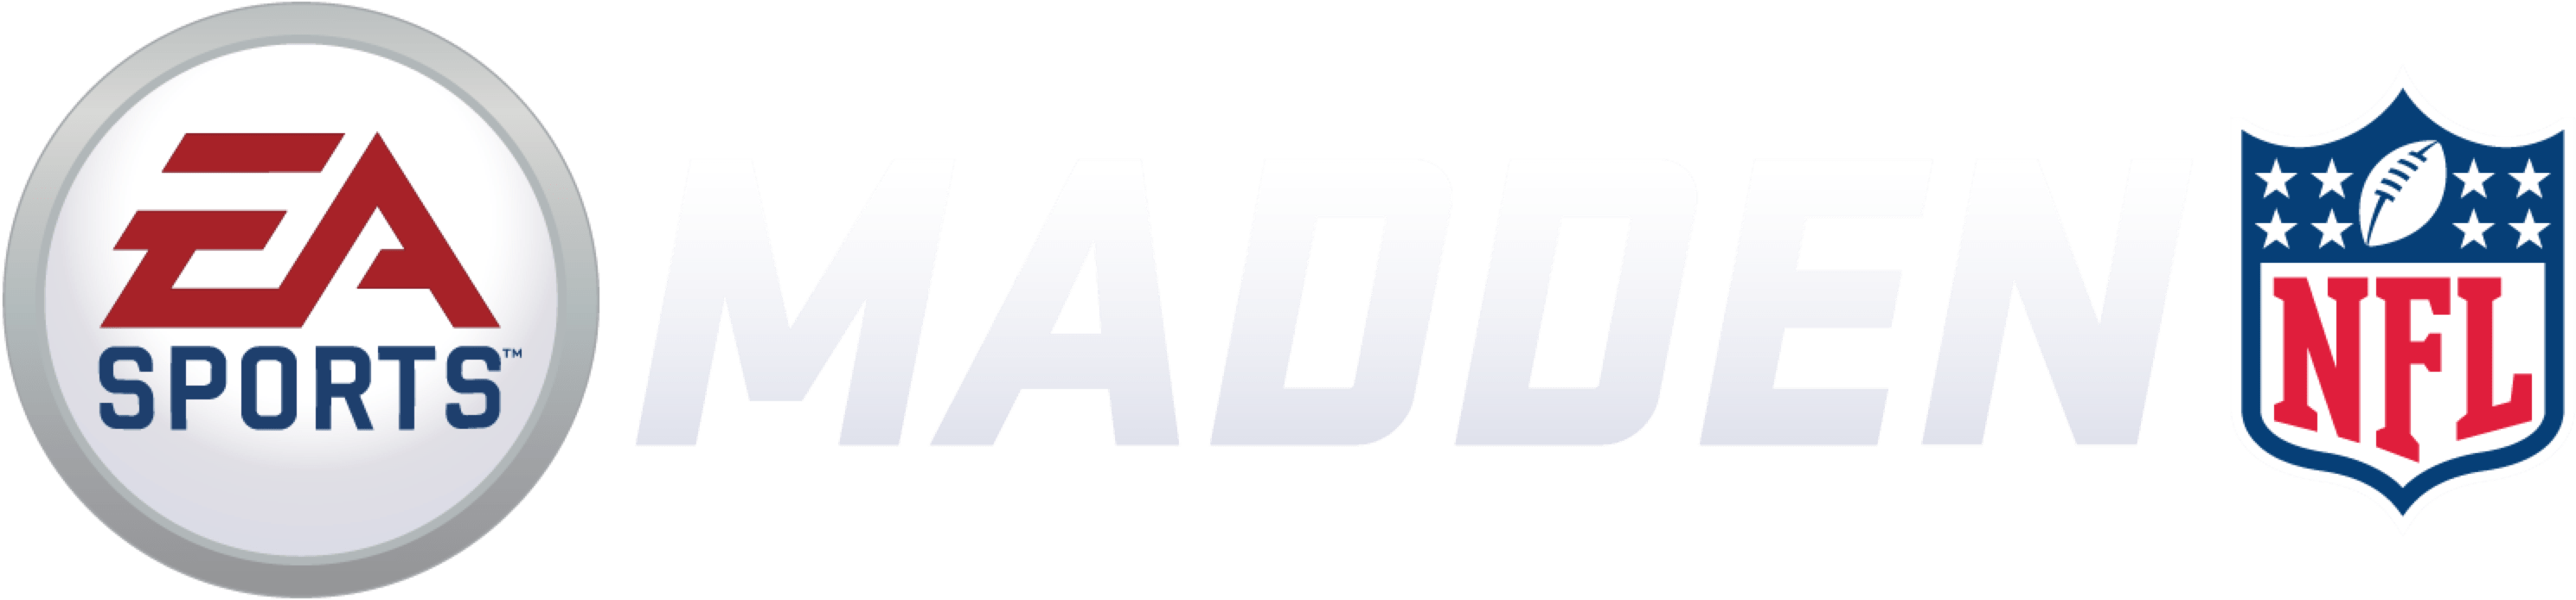 Madden NFL Logo PNG HD Quality